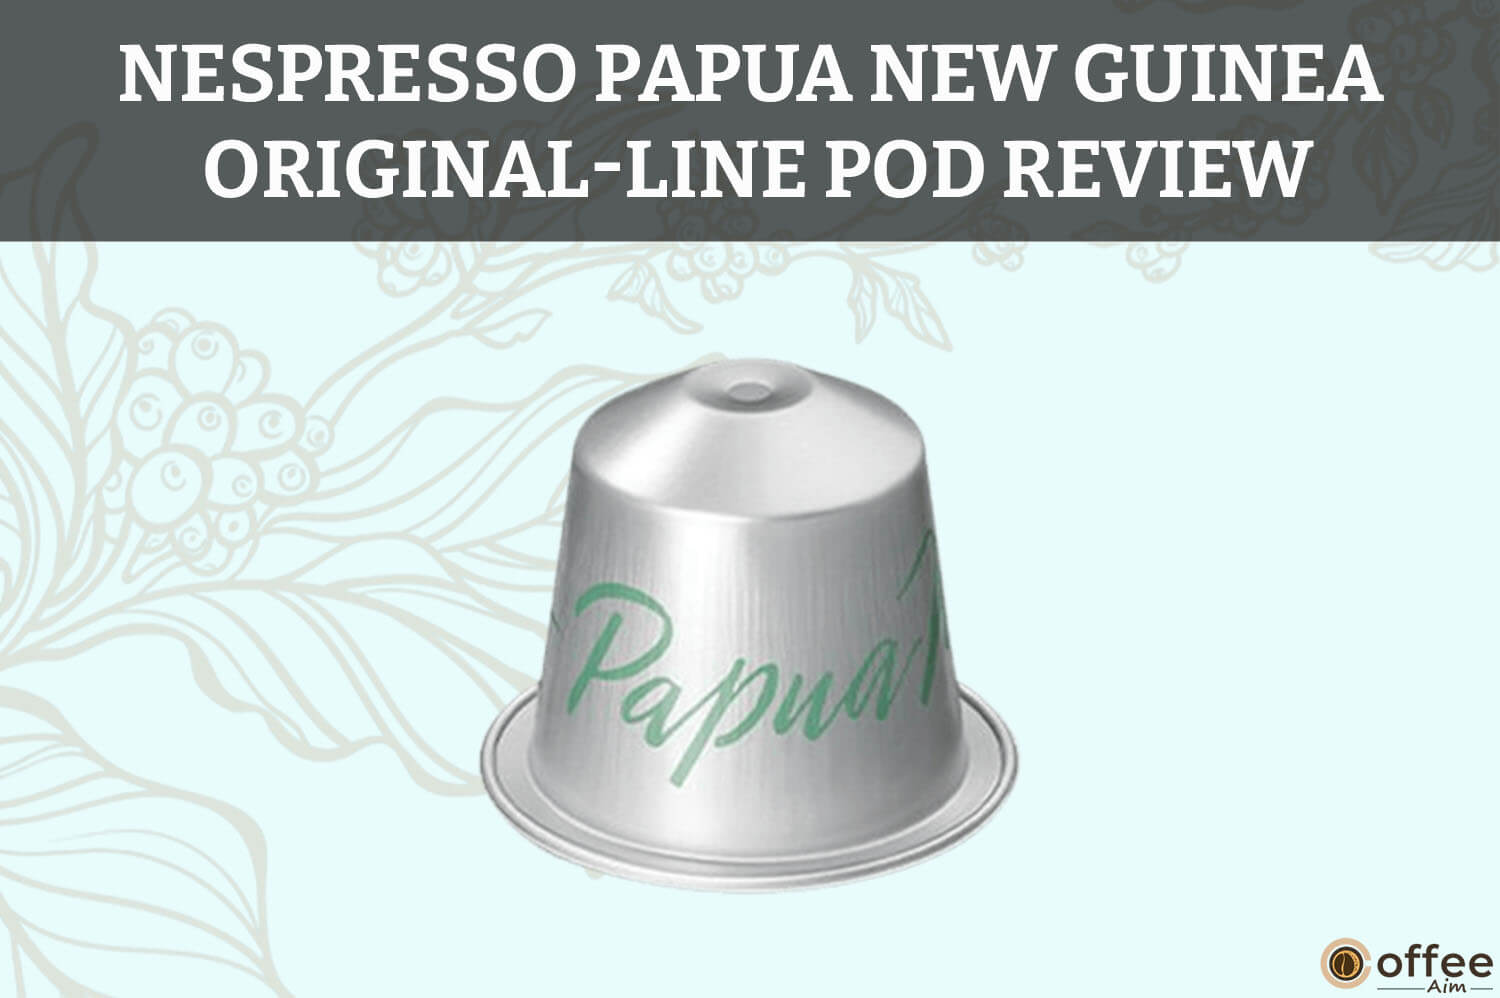 Featured image for the article "Nespresso Papua New Guinea OriginalLine Pod Review"